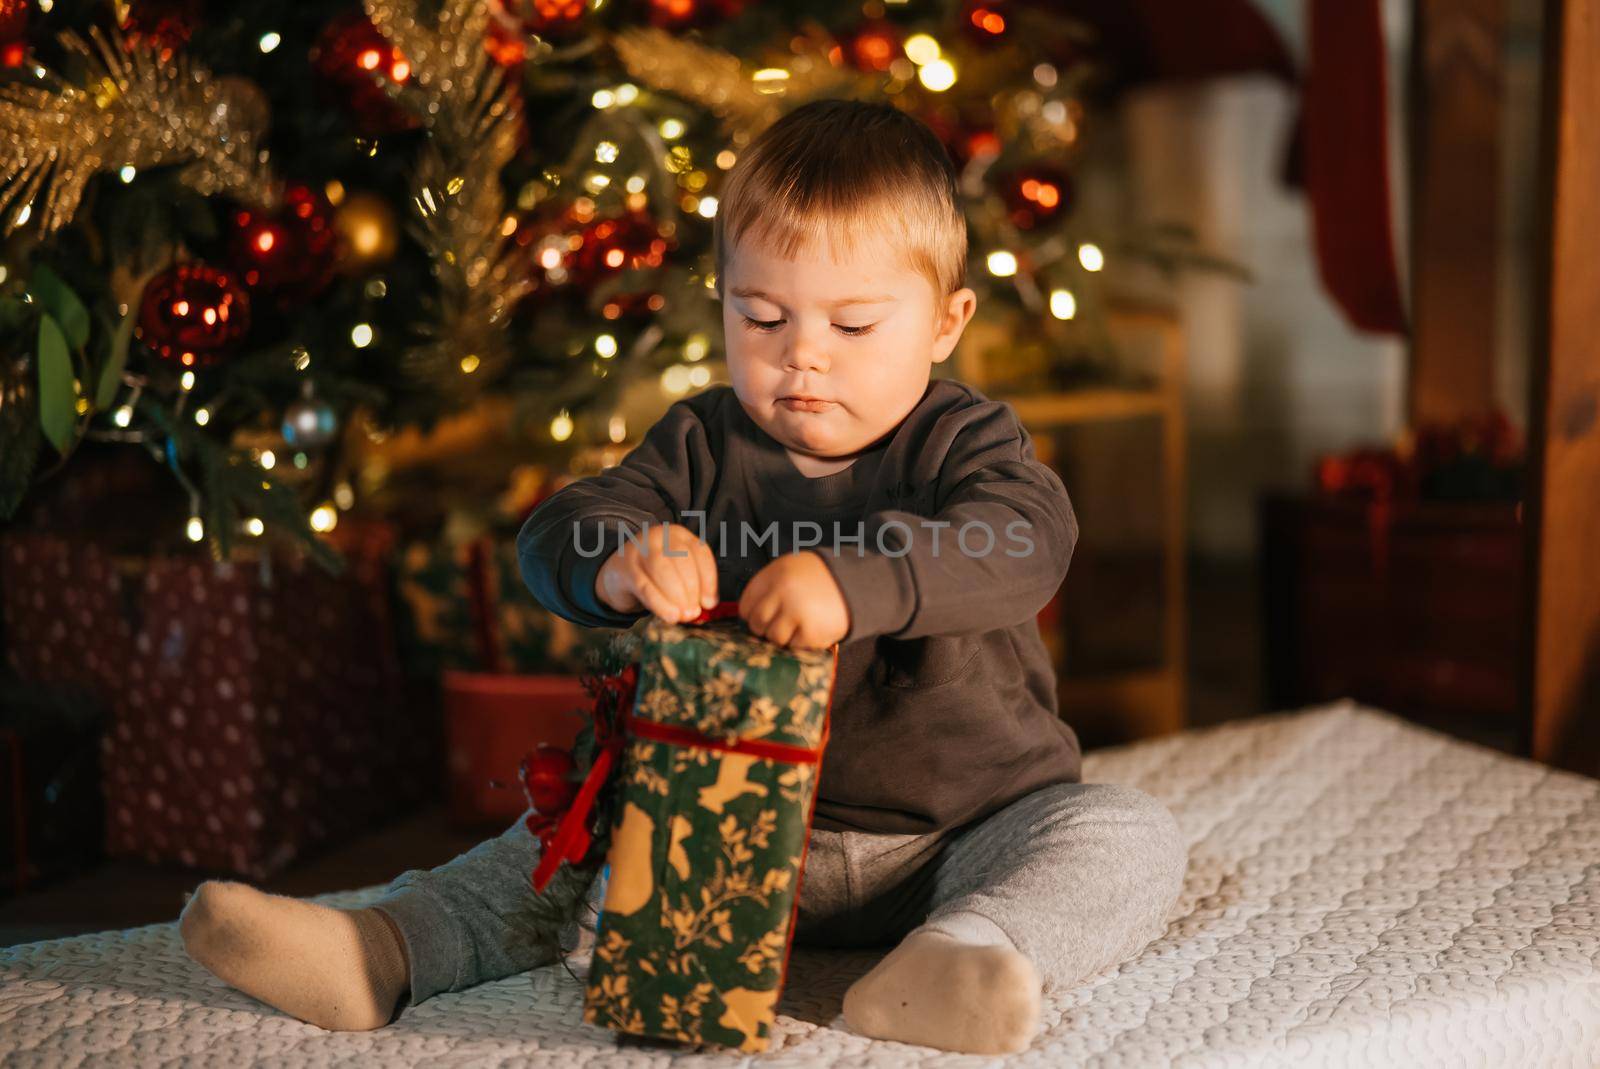 Child celebrating holidays near Christmas tree. New year and gifts. Magic.